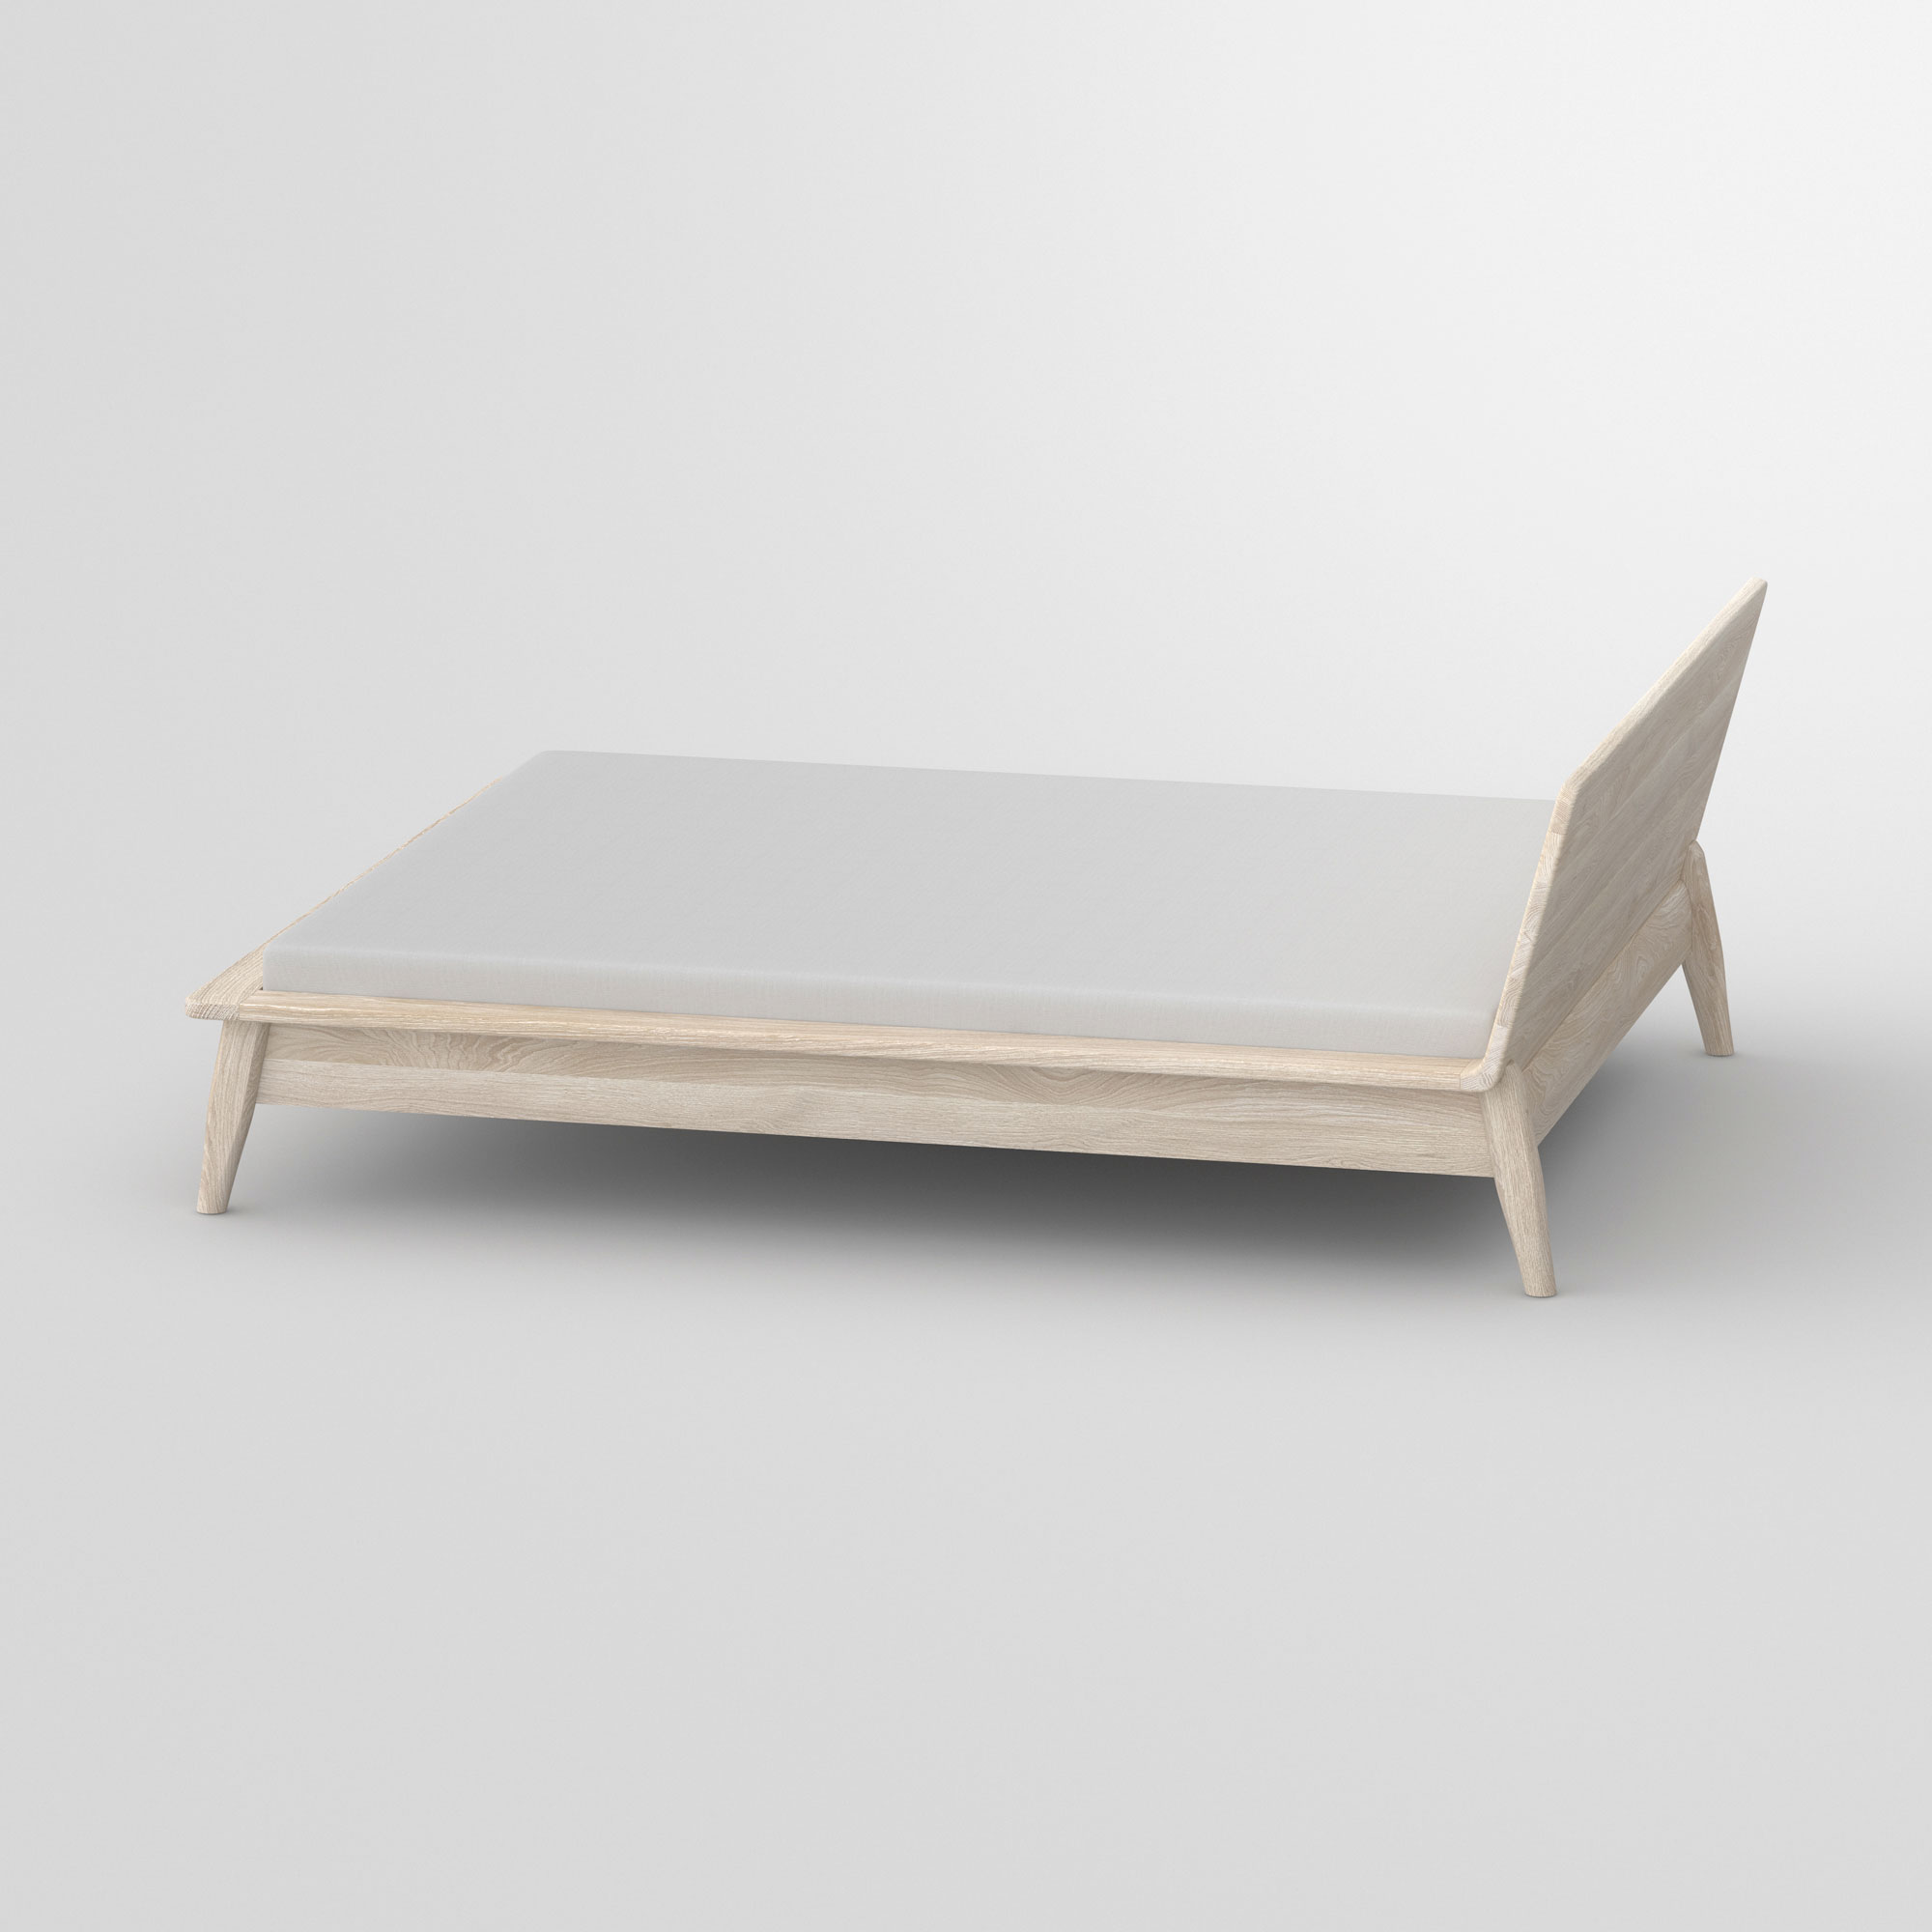 Designer Bed AETAS cam1 custom made in solid wood by vitamin design